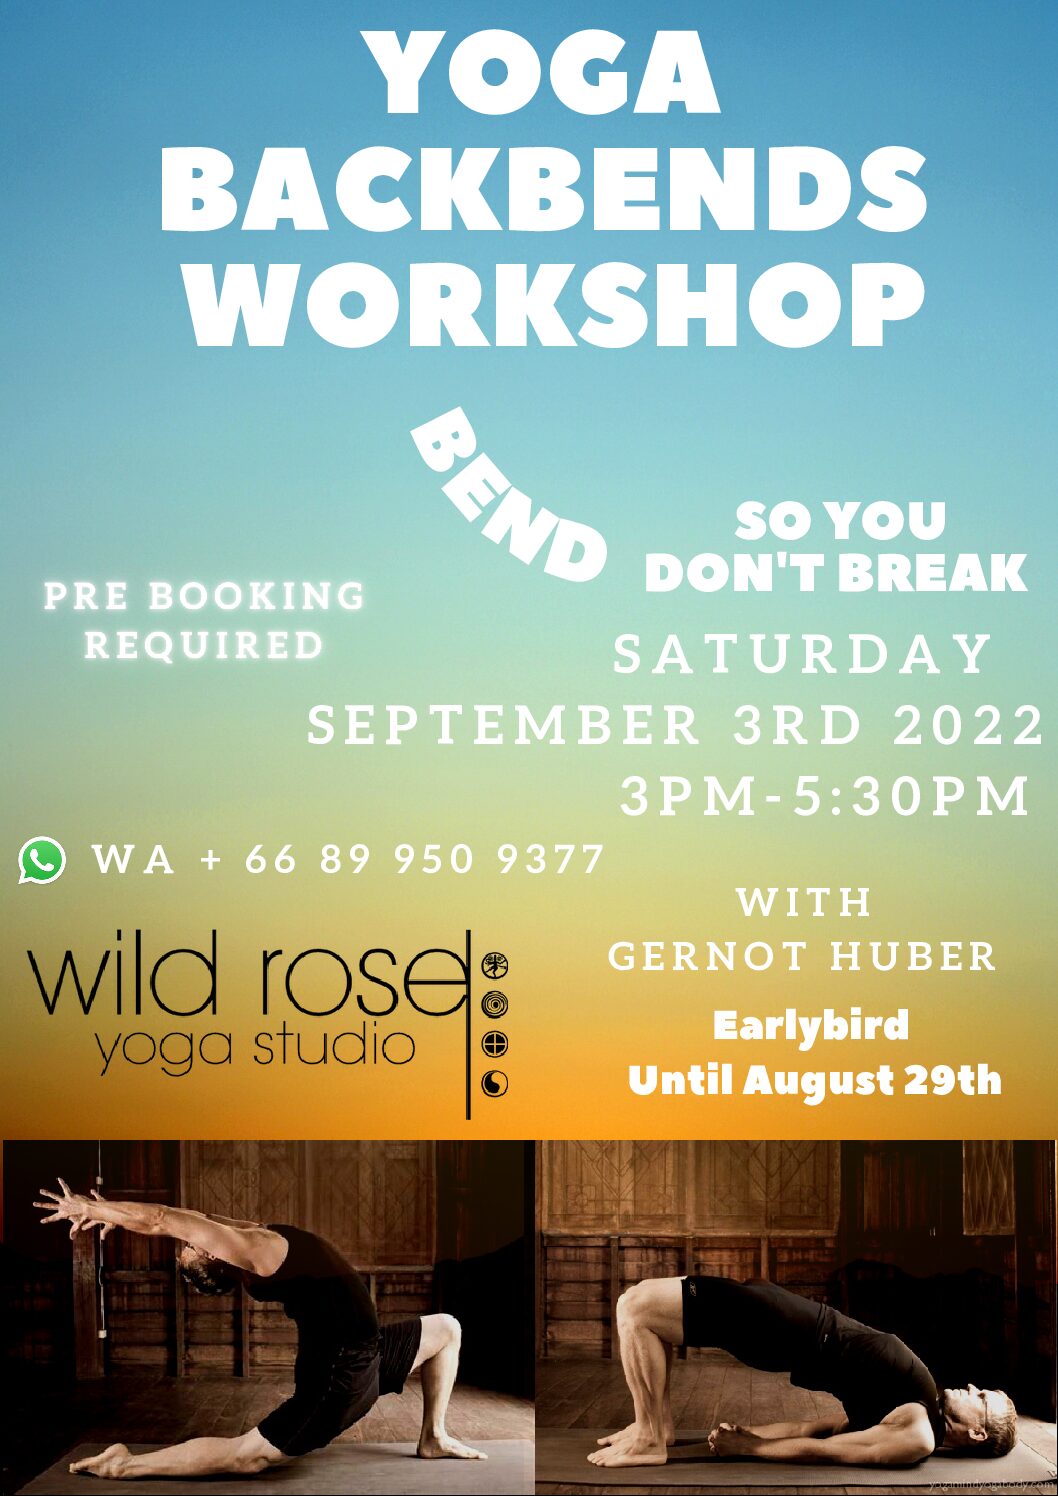 Yoga Backbends Workshop Chiang Mai, Thailand September 3rd, 2022 at Wild Rose Yoga Studio